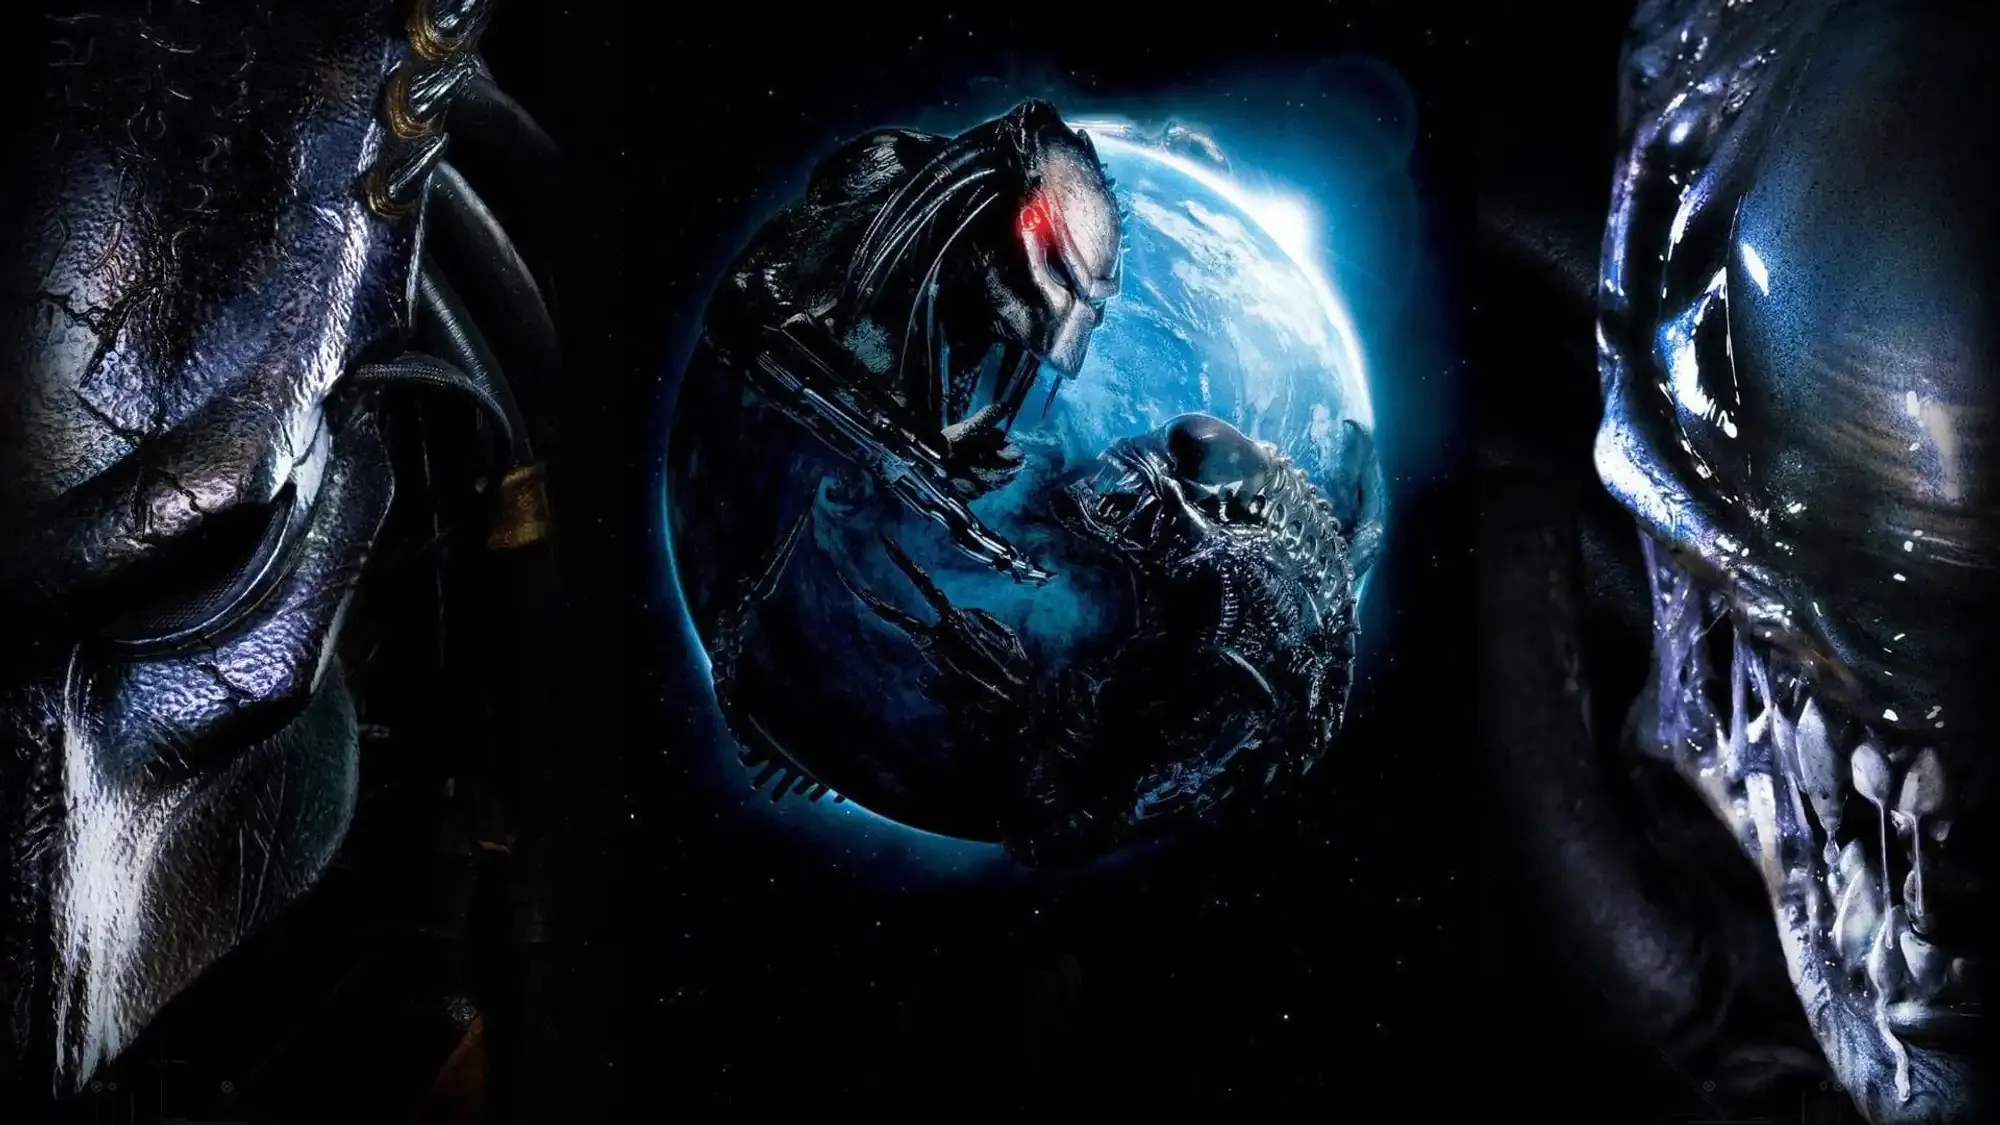 Aliens vs Predator: Requiem movie review